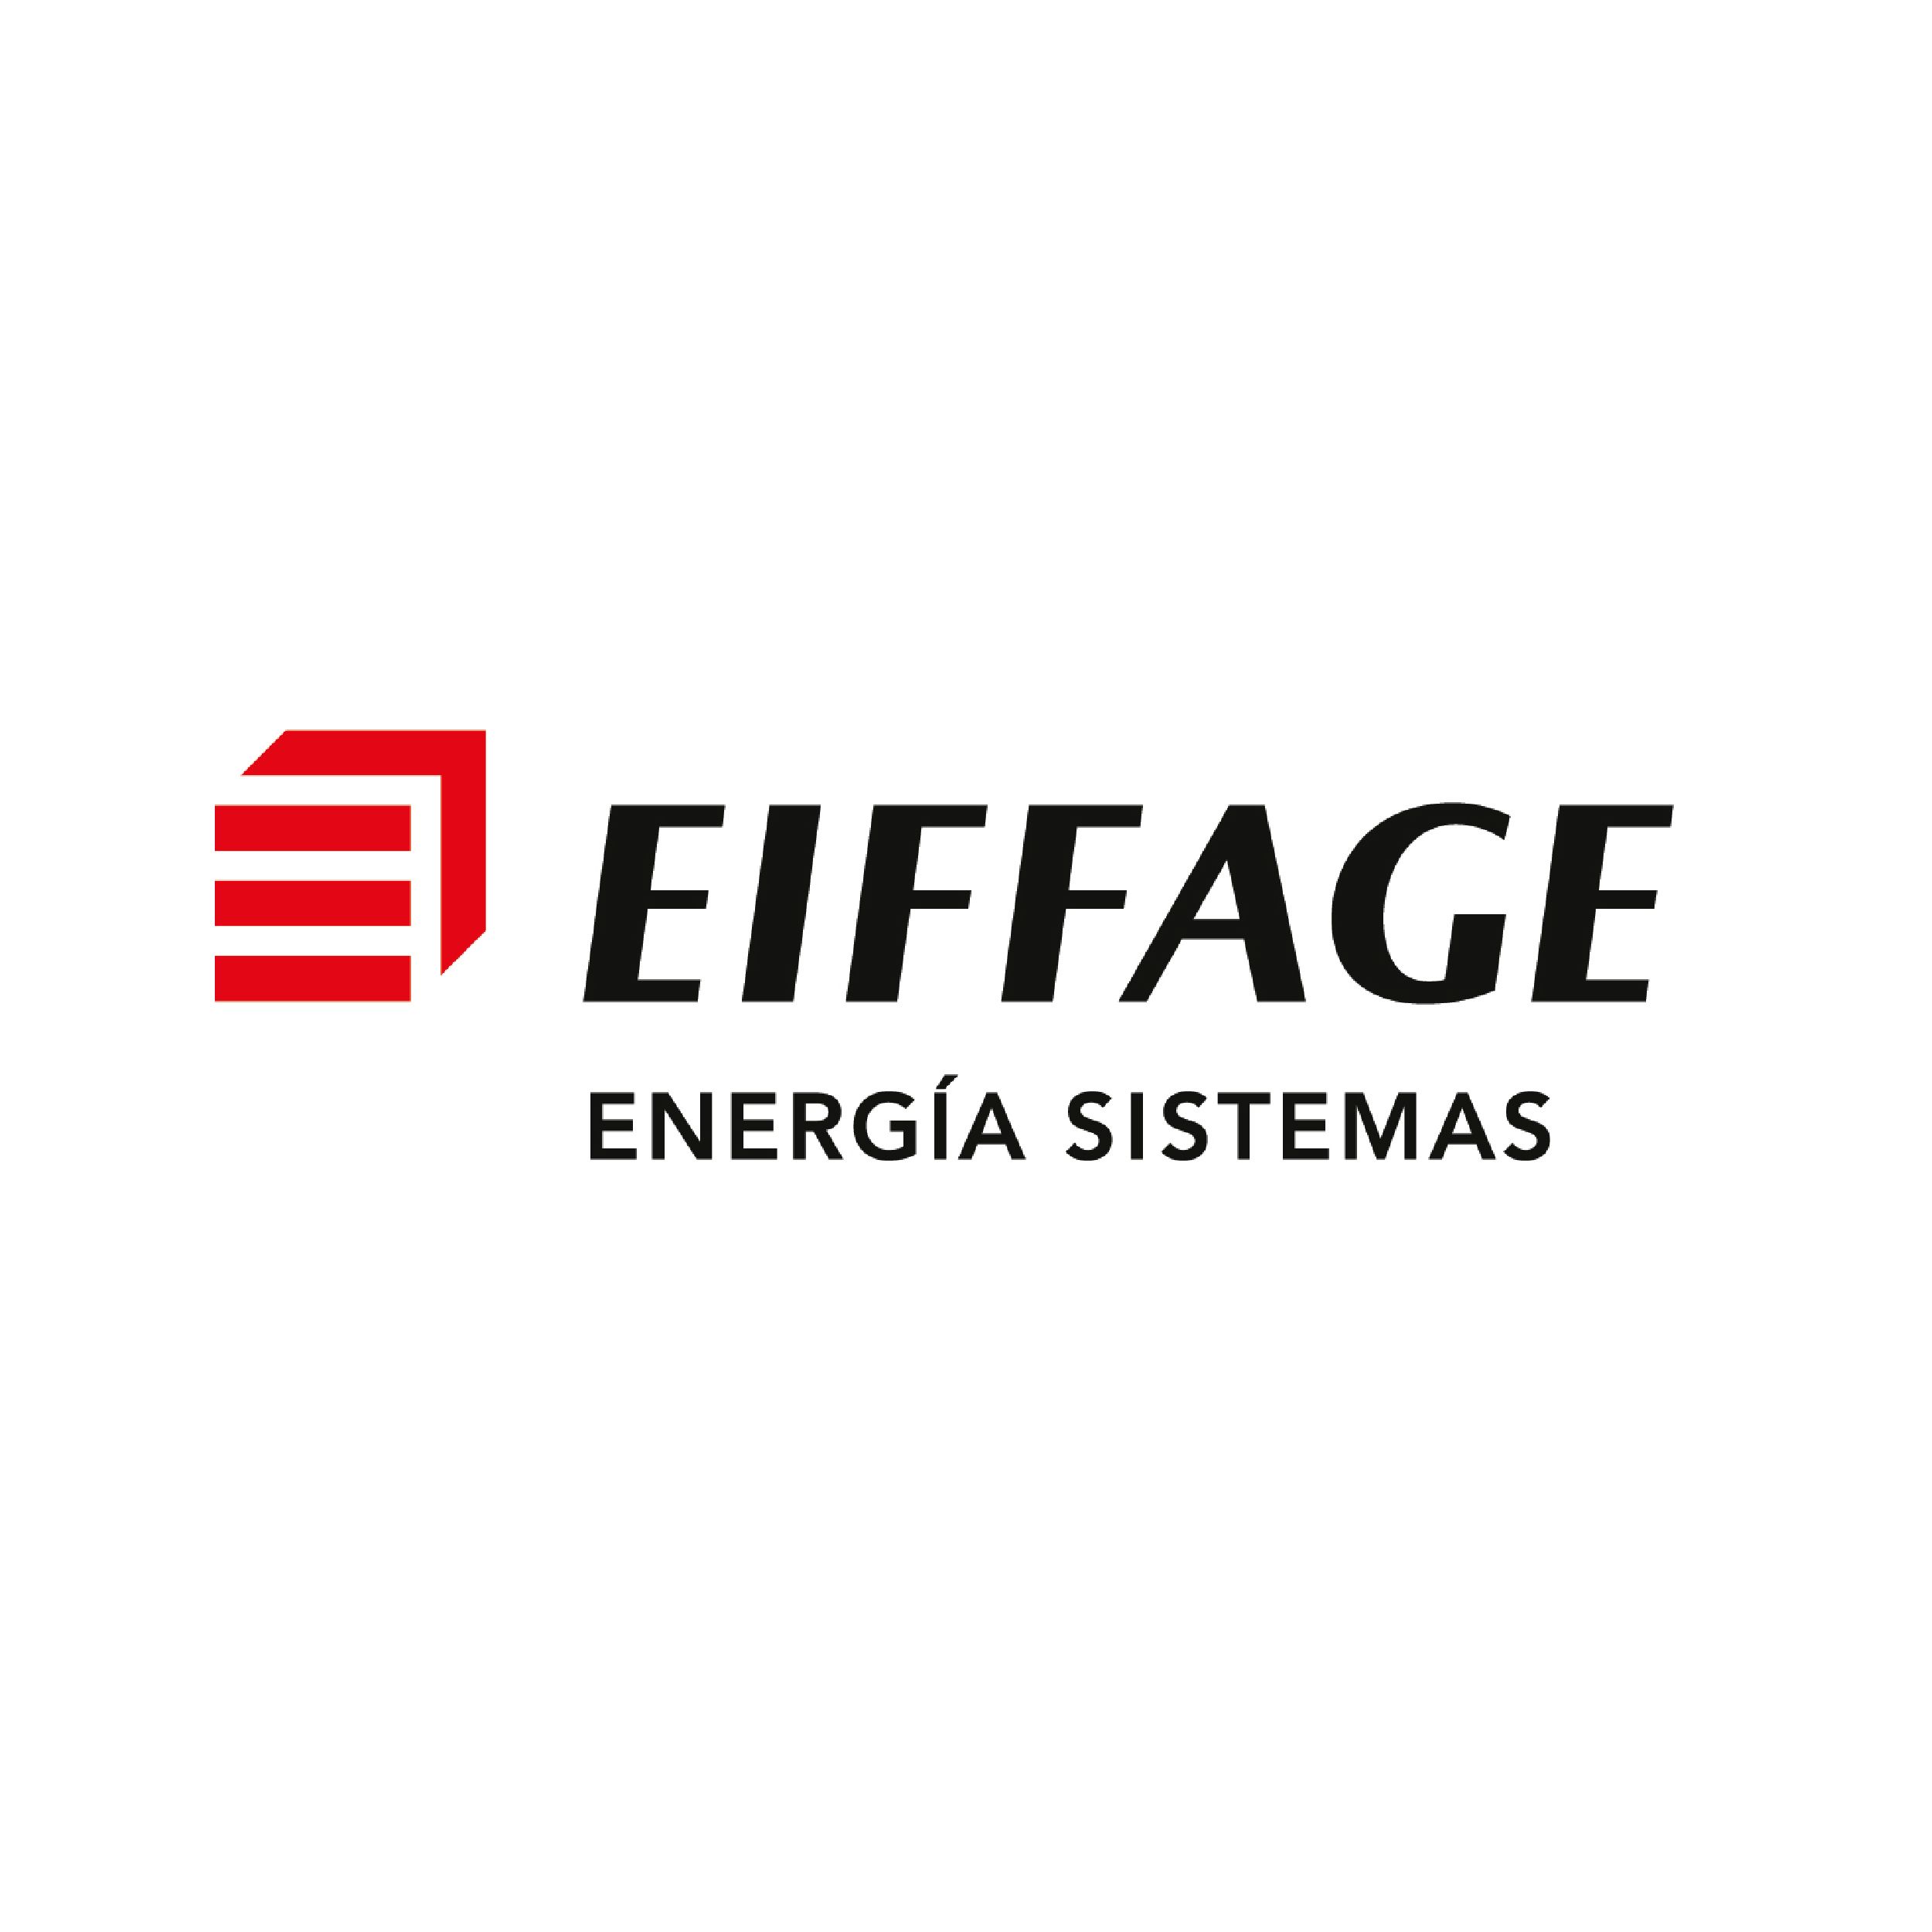 EIFFAGE ENERGÍA SISTEMAS